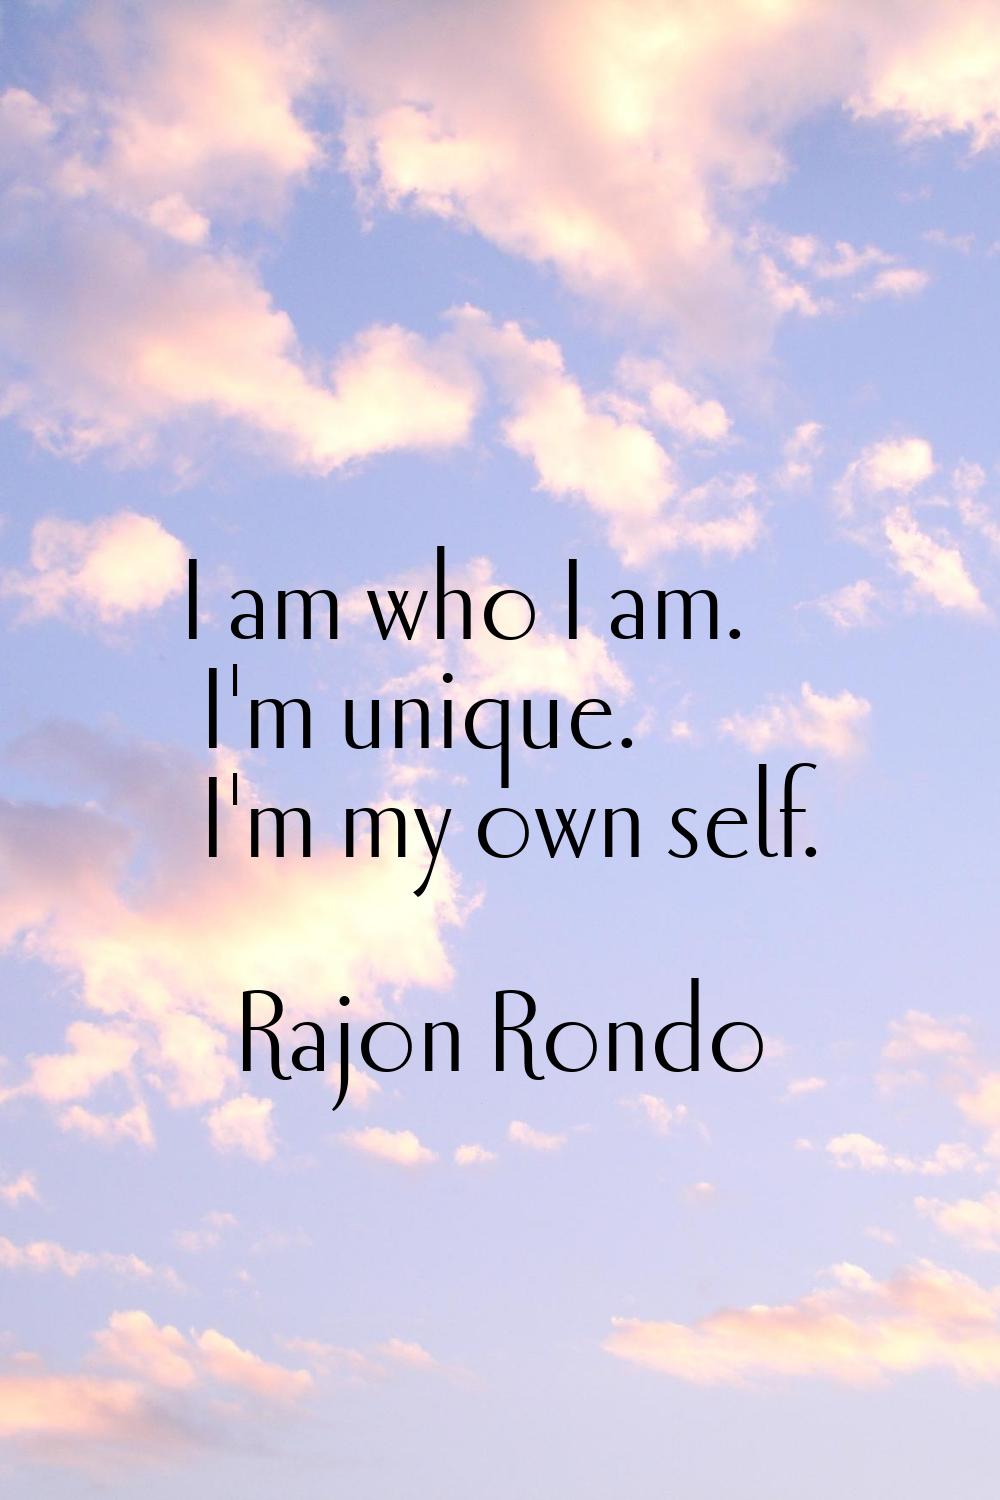 I am who I am. I'm unique. I'm my own self.